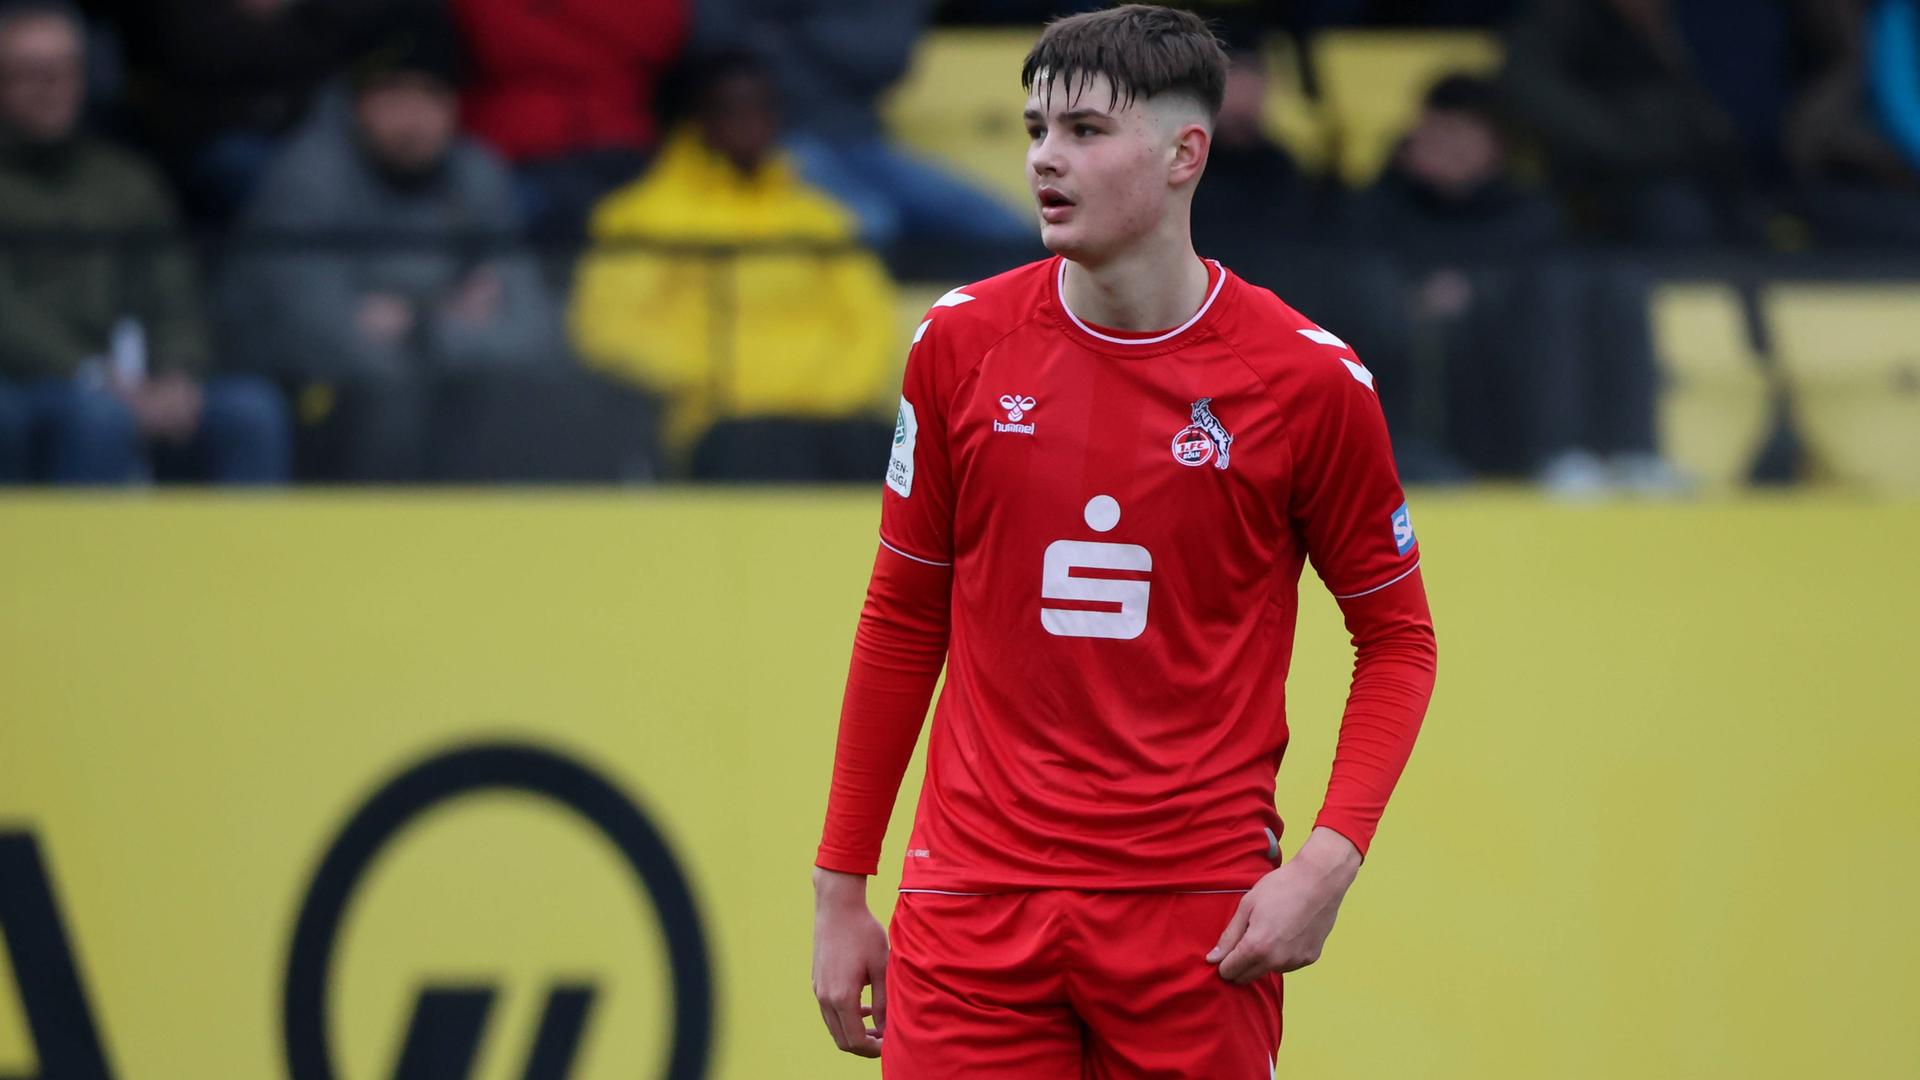 U19-Stürmer Jaka Cuber Potocnik vom 1. FC Köln steht in rotem Trikot des 1. FC Köln auf dem Fußballplatz.